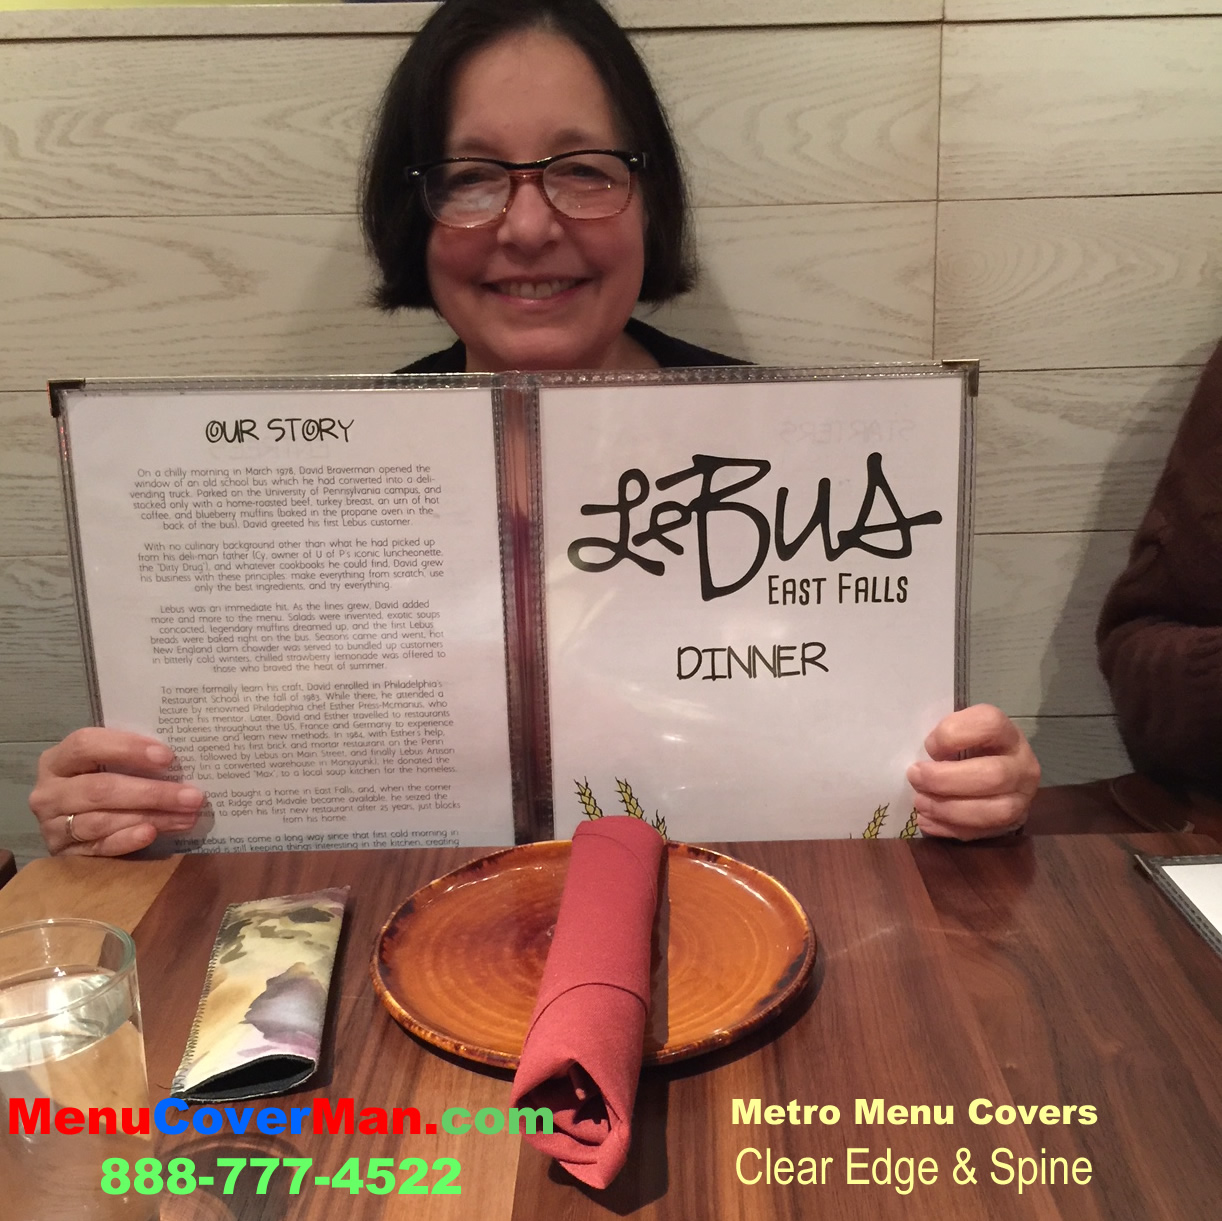 Metro menu covers in use at Le Bus Restaurant East Falls Philadelphia.